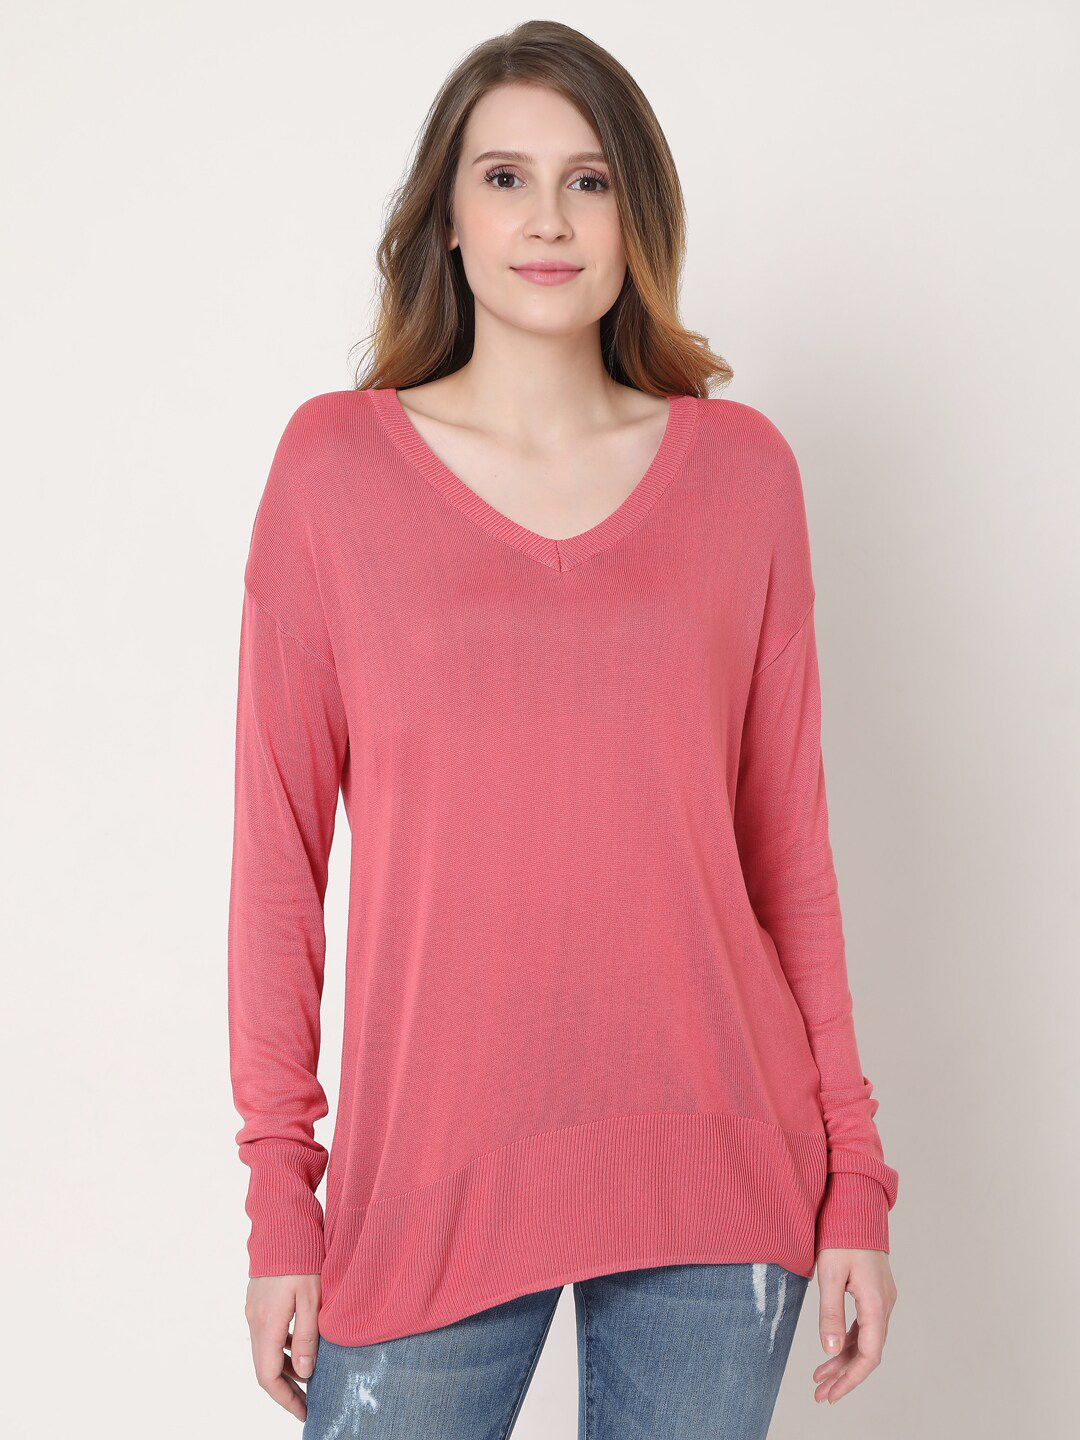 Vero Moda Women Pink Pullover Price in India